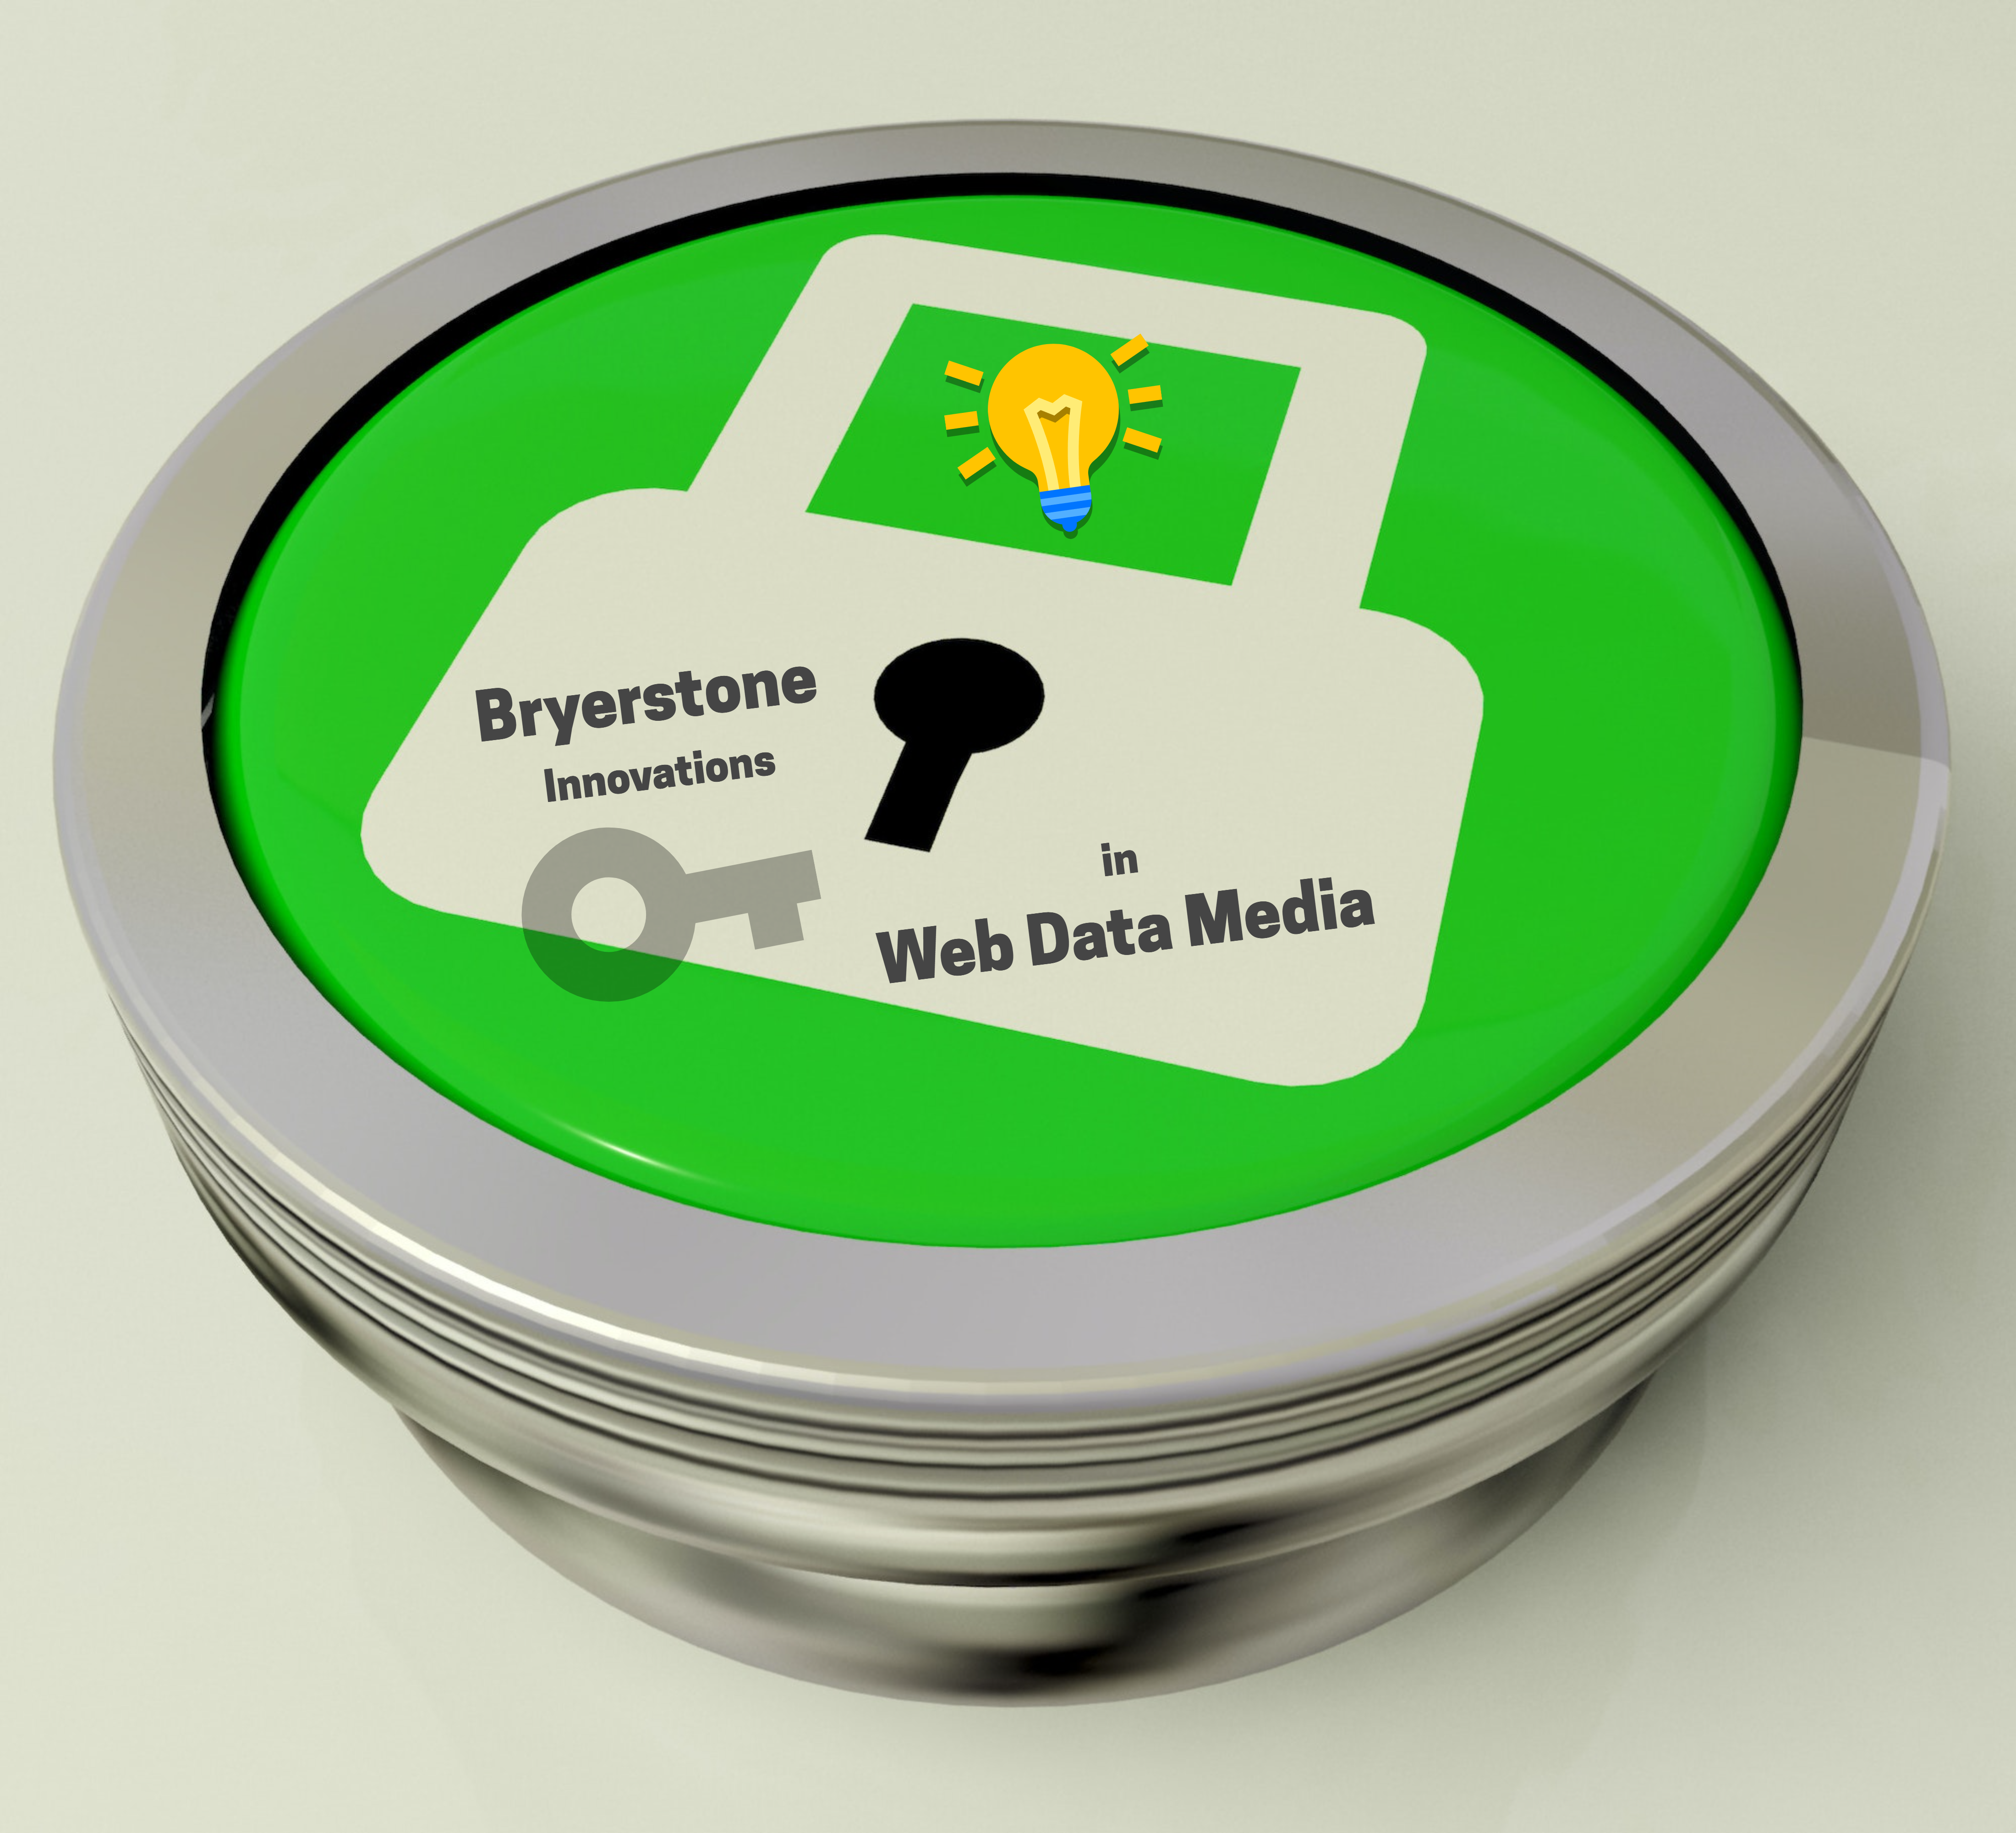 Bryerstone: Innovations in Web, Data & Media